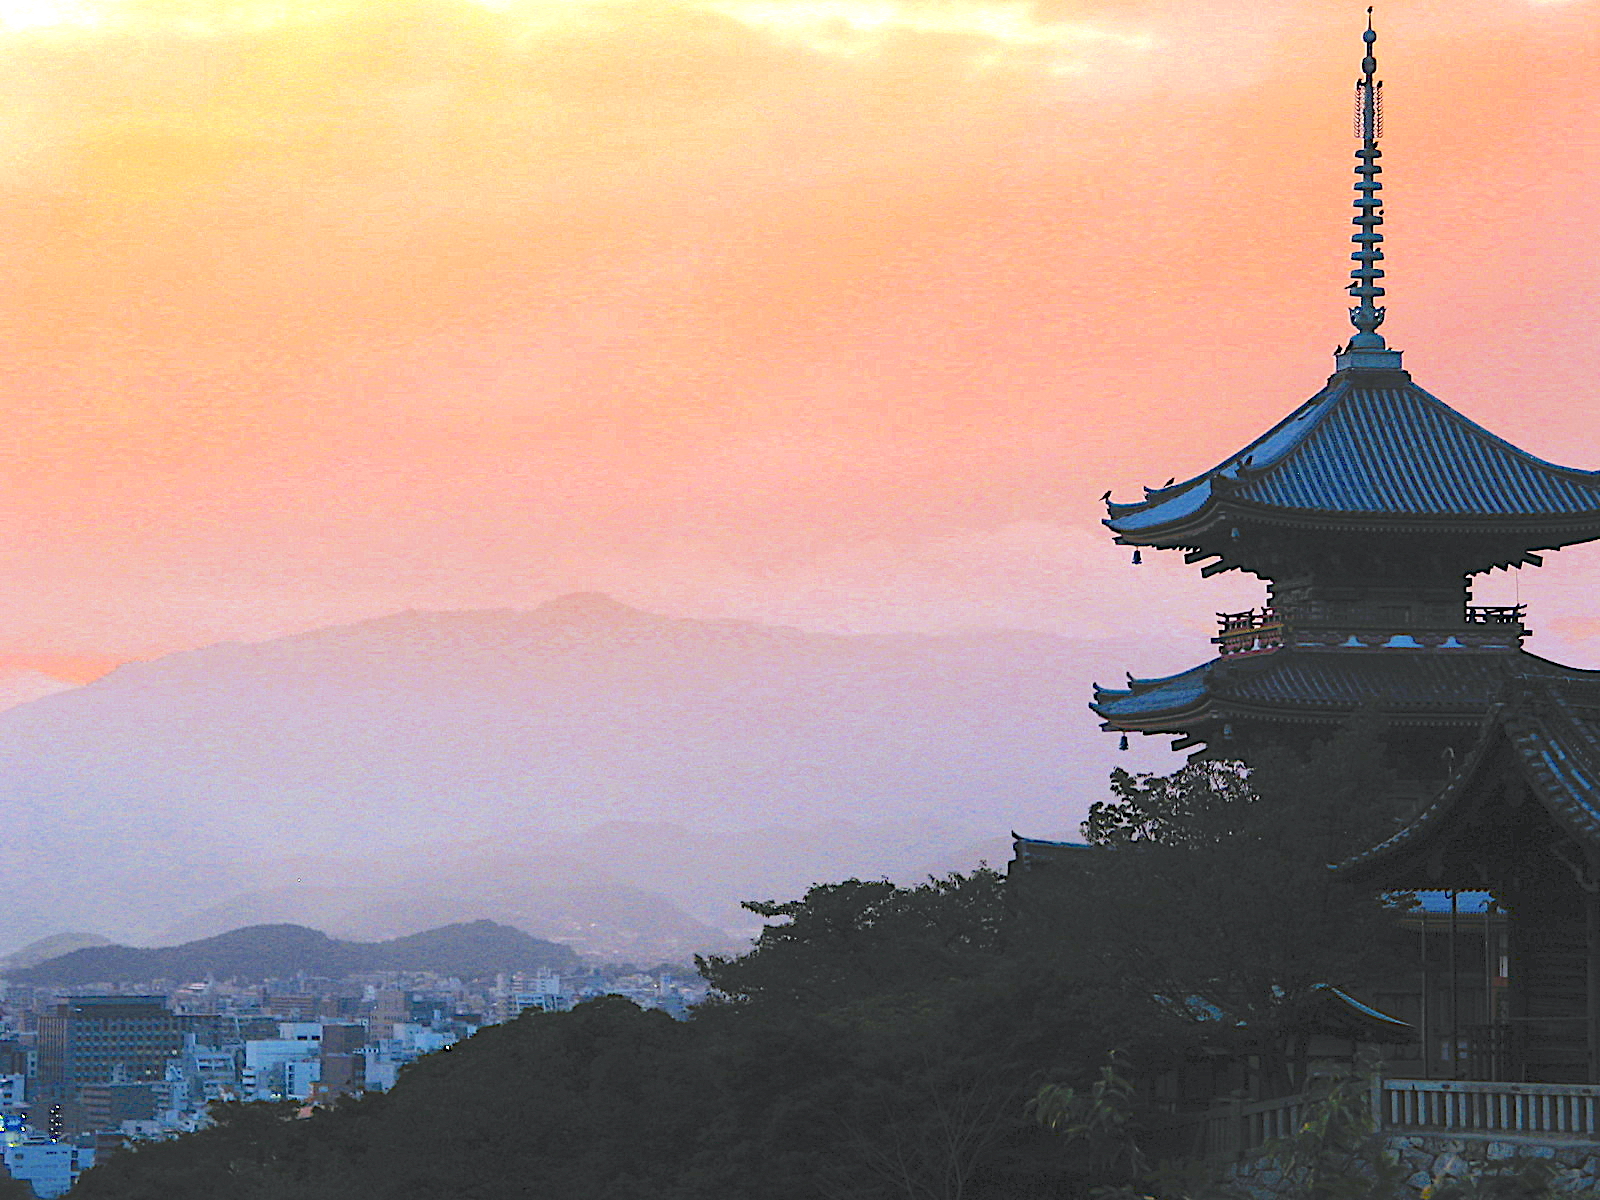 Evening calm at Buddhist temple Kiyomizu-dera in Kyoto